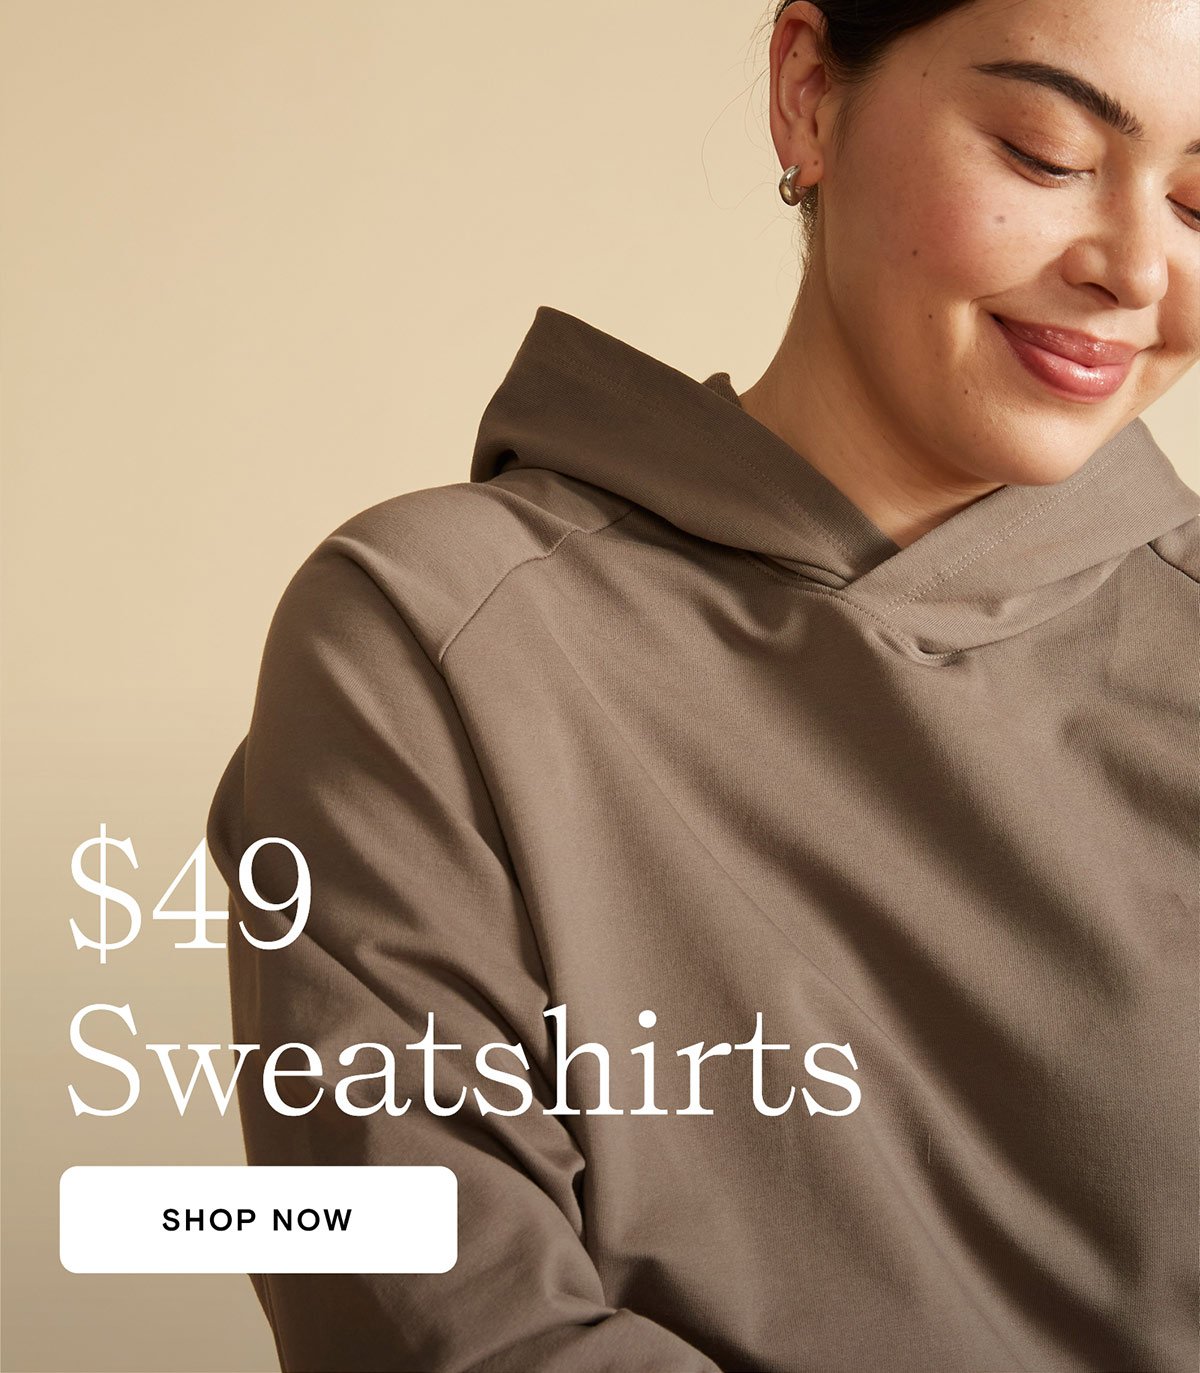 Shop these $49 sweatshirts